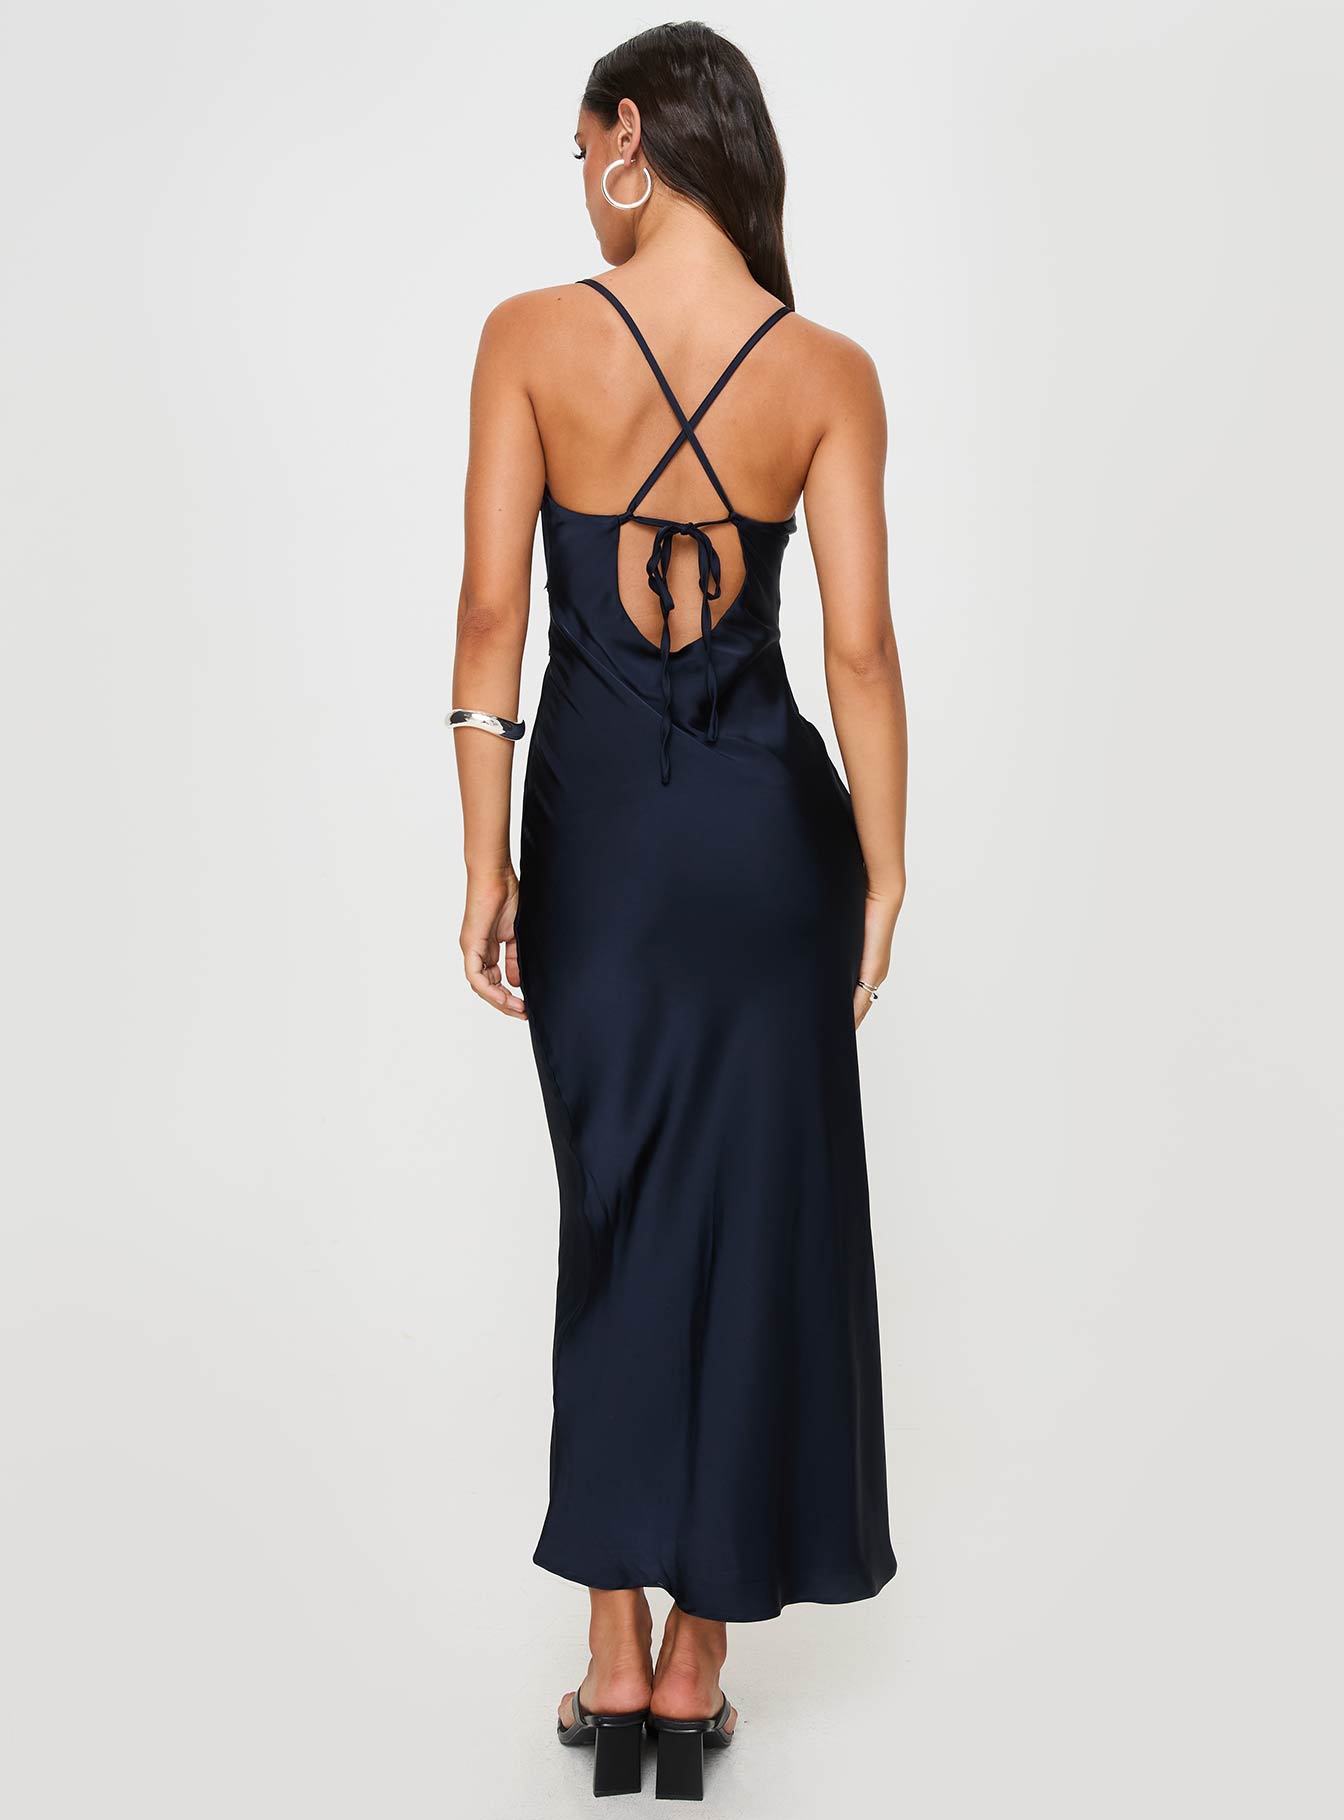 Shop Formal Dress - Treasure Bias Cut Maxi Dress Navy secondary image